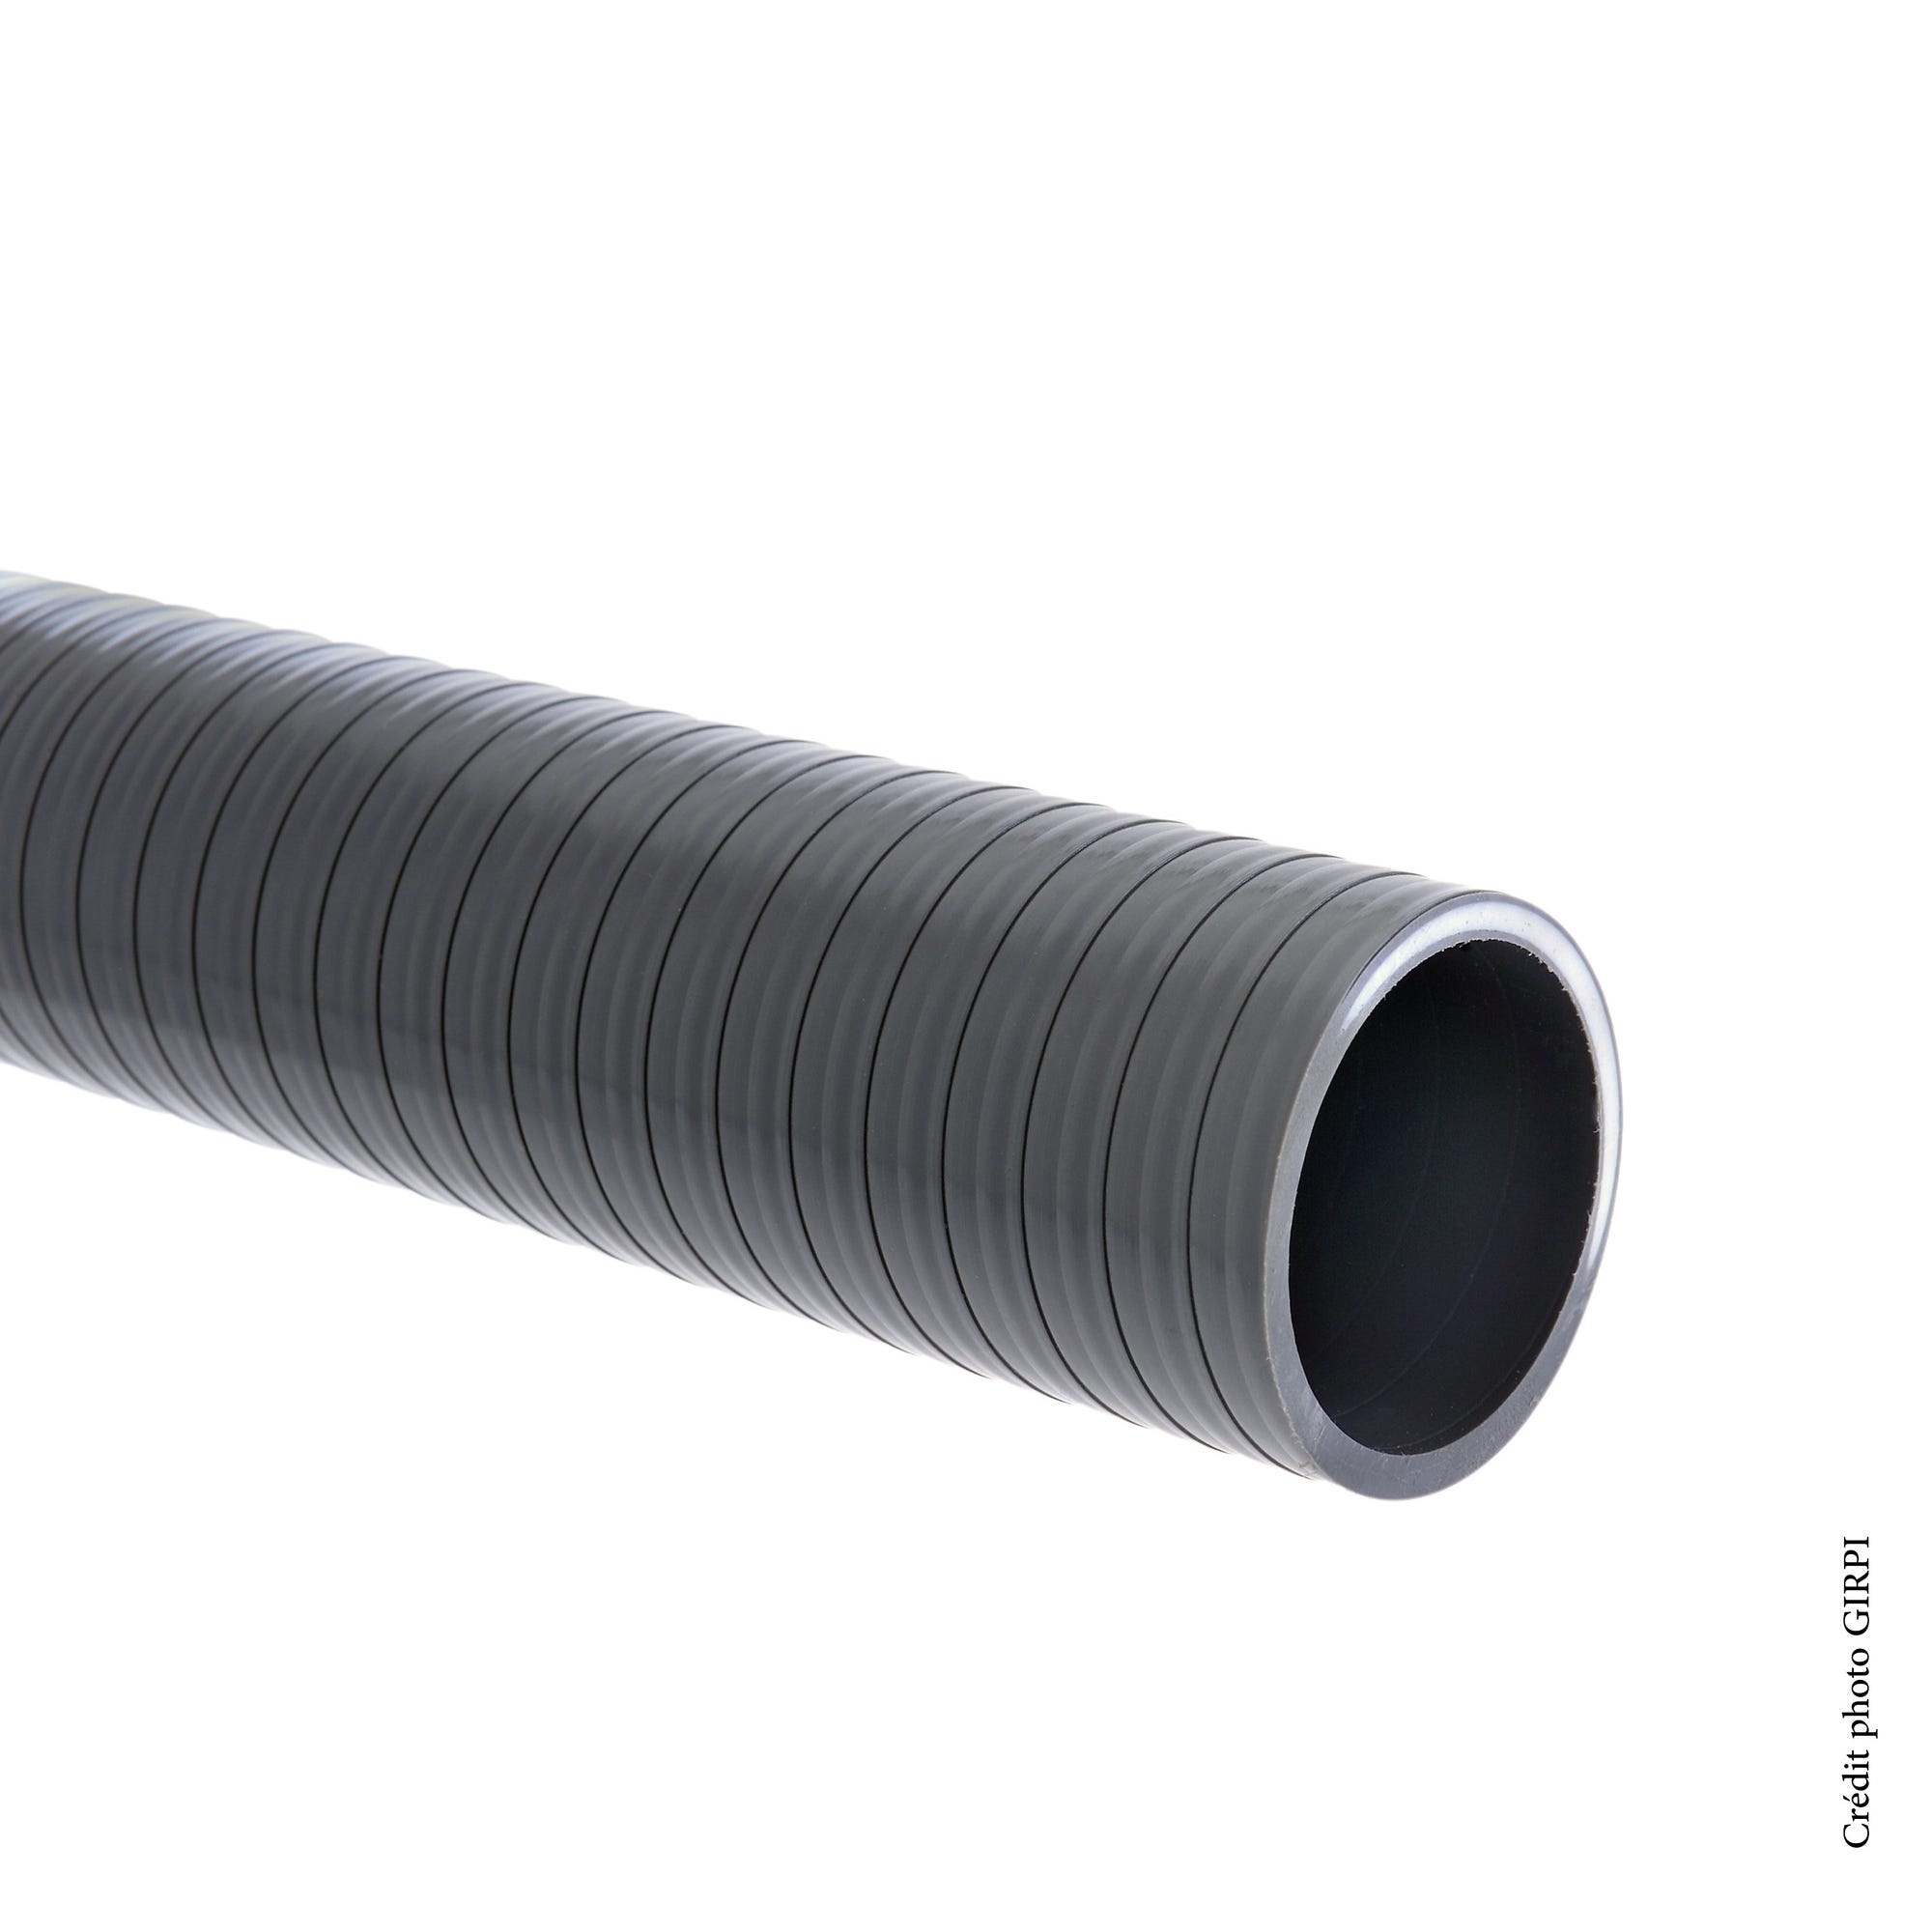 Tube d'évacuation flexible Diam.32 mm Long.1 m Turflex 0